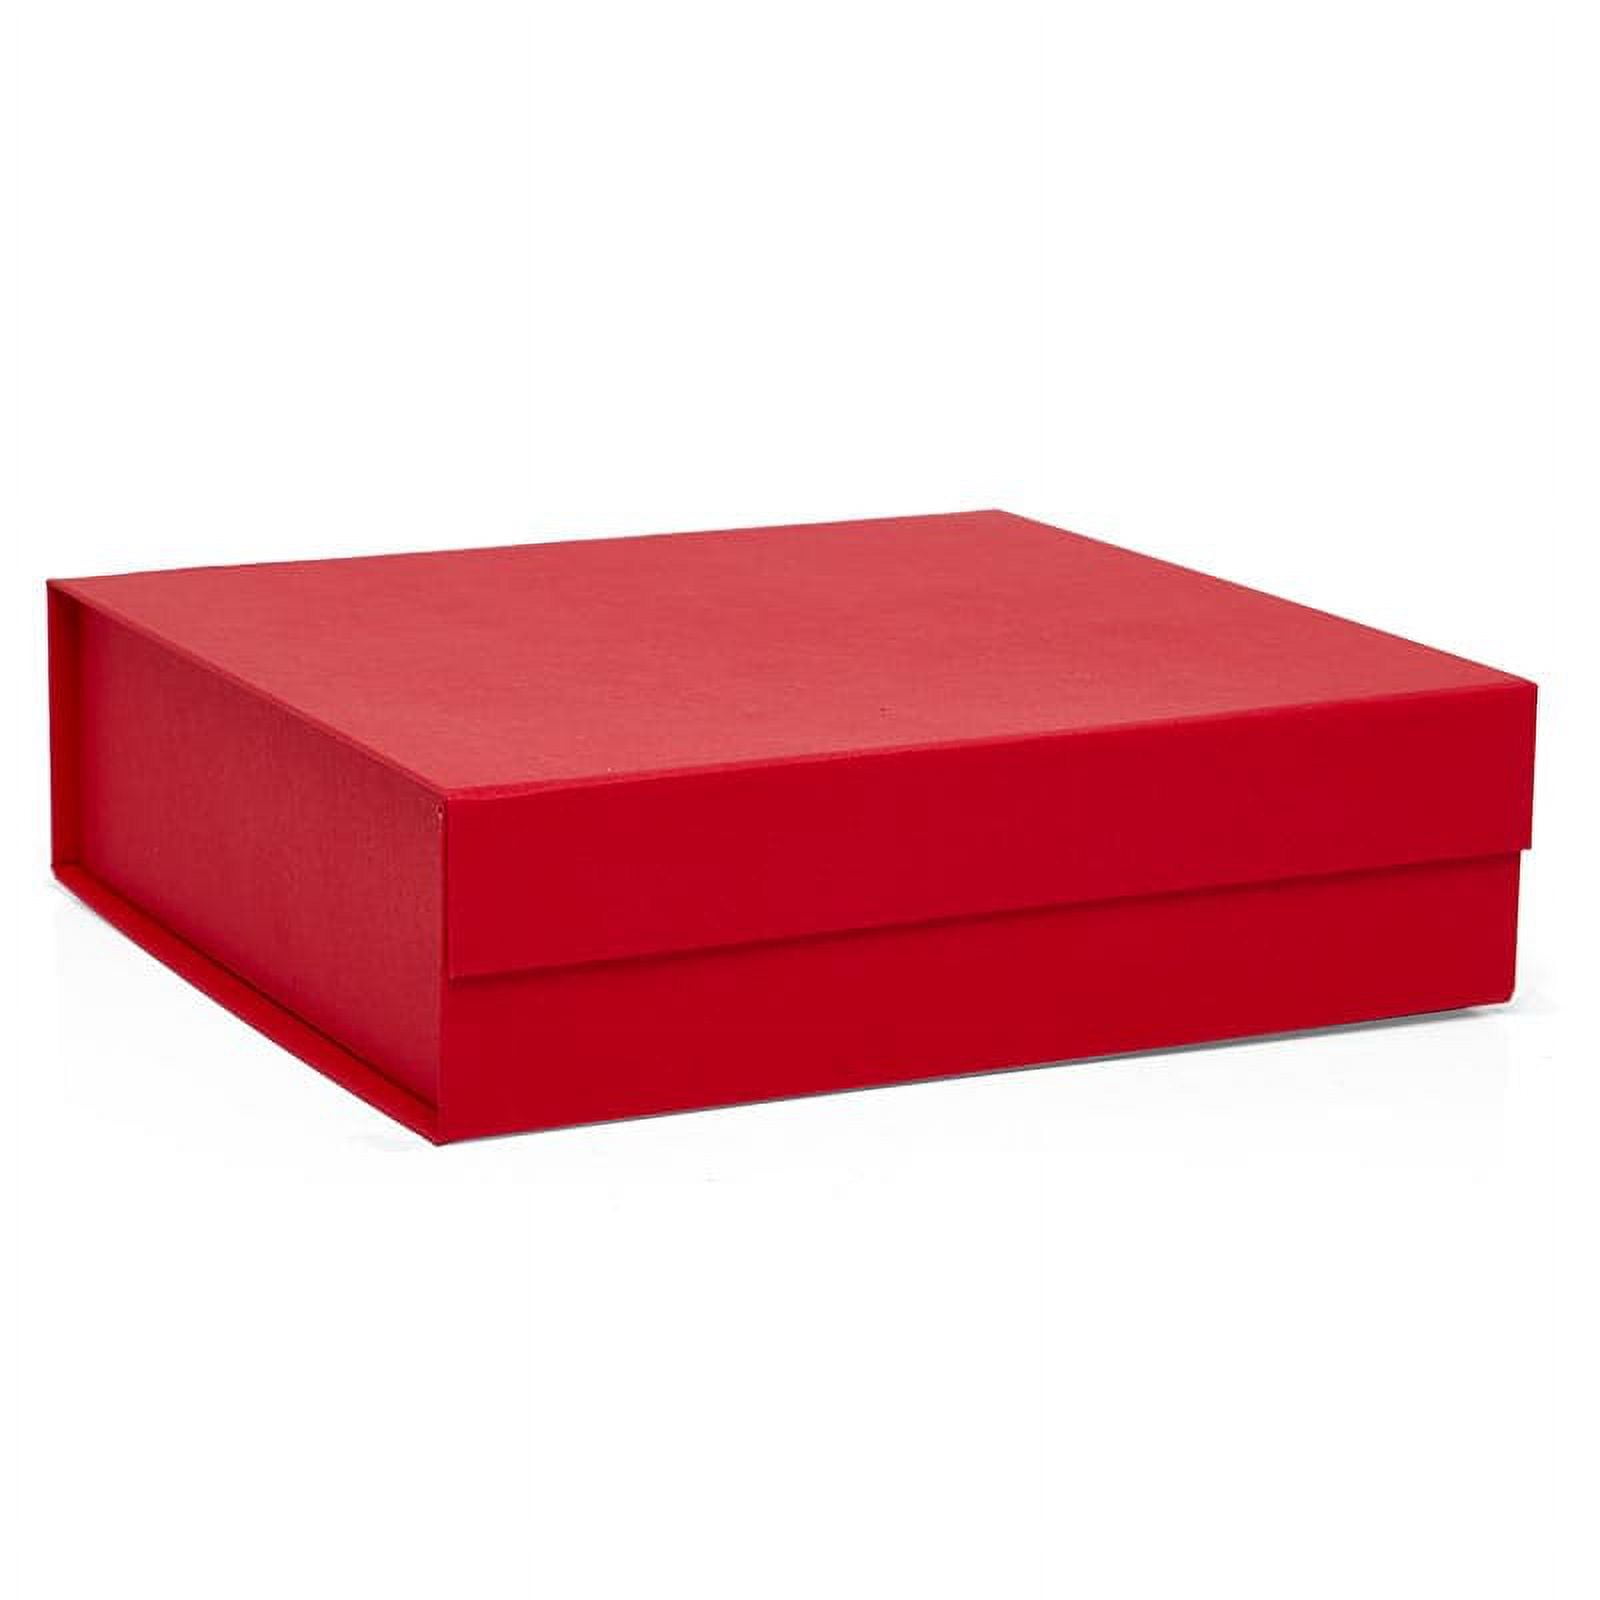 20pcs/lot 3 Size Colorfu Foldable Hard Gift Box With Magnetic